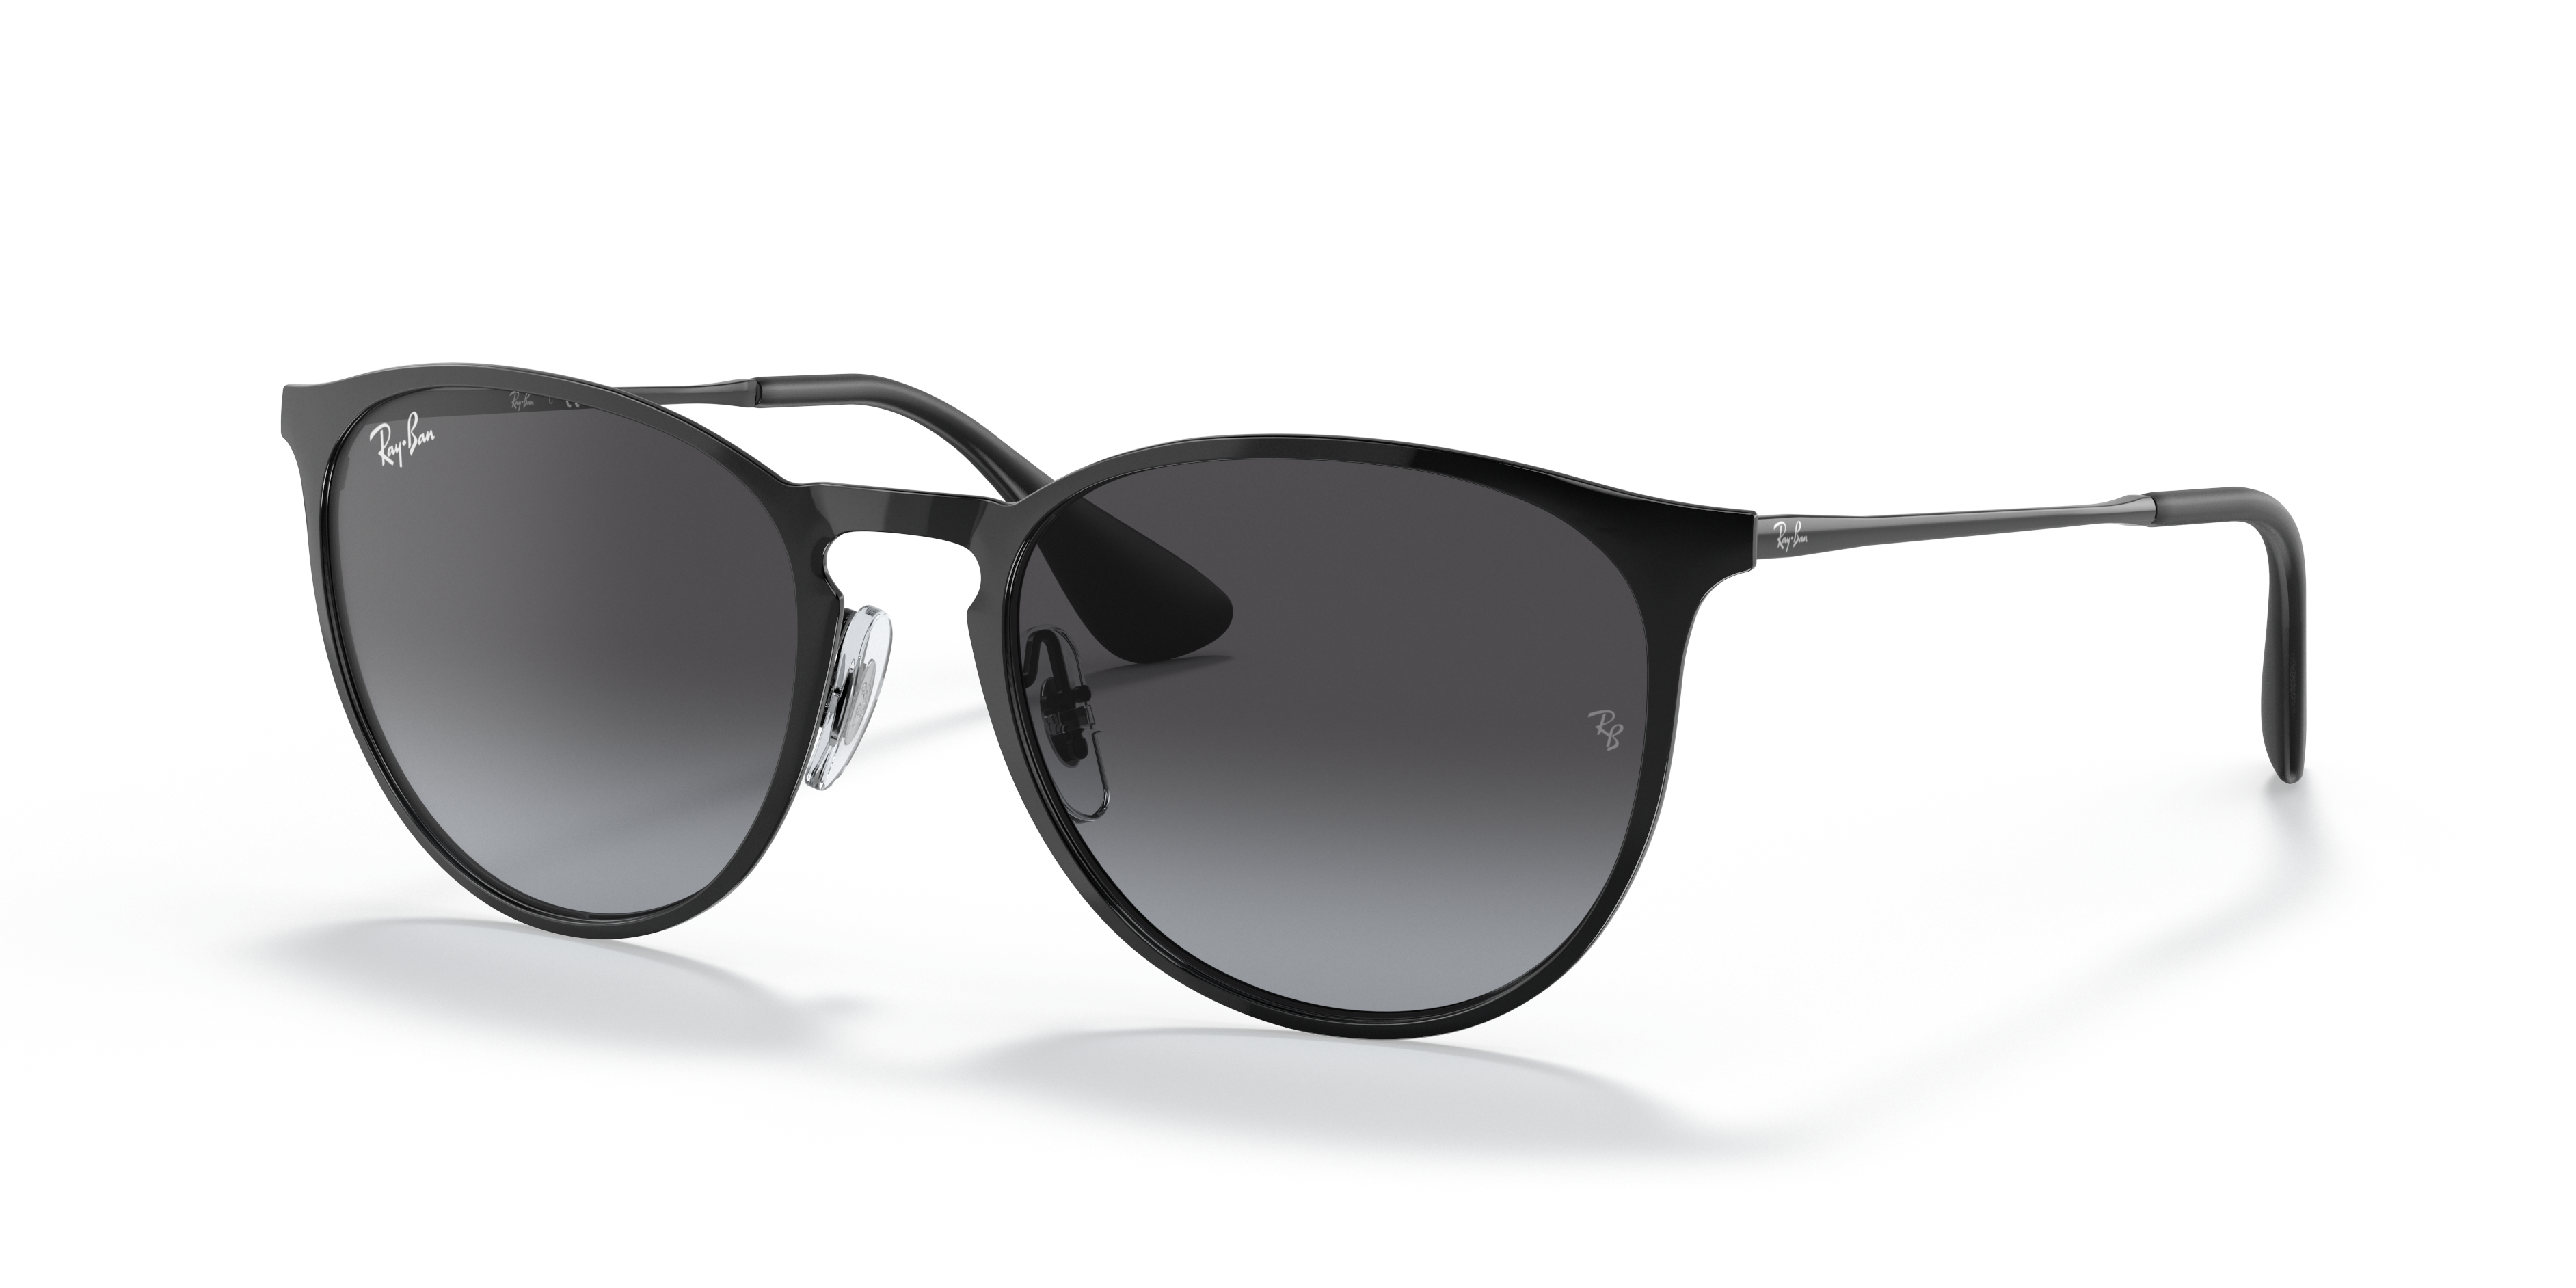 ERIKA METAL Sunglasses in Black and Grey - RB3539 | Ray-Ban® CA